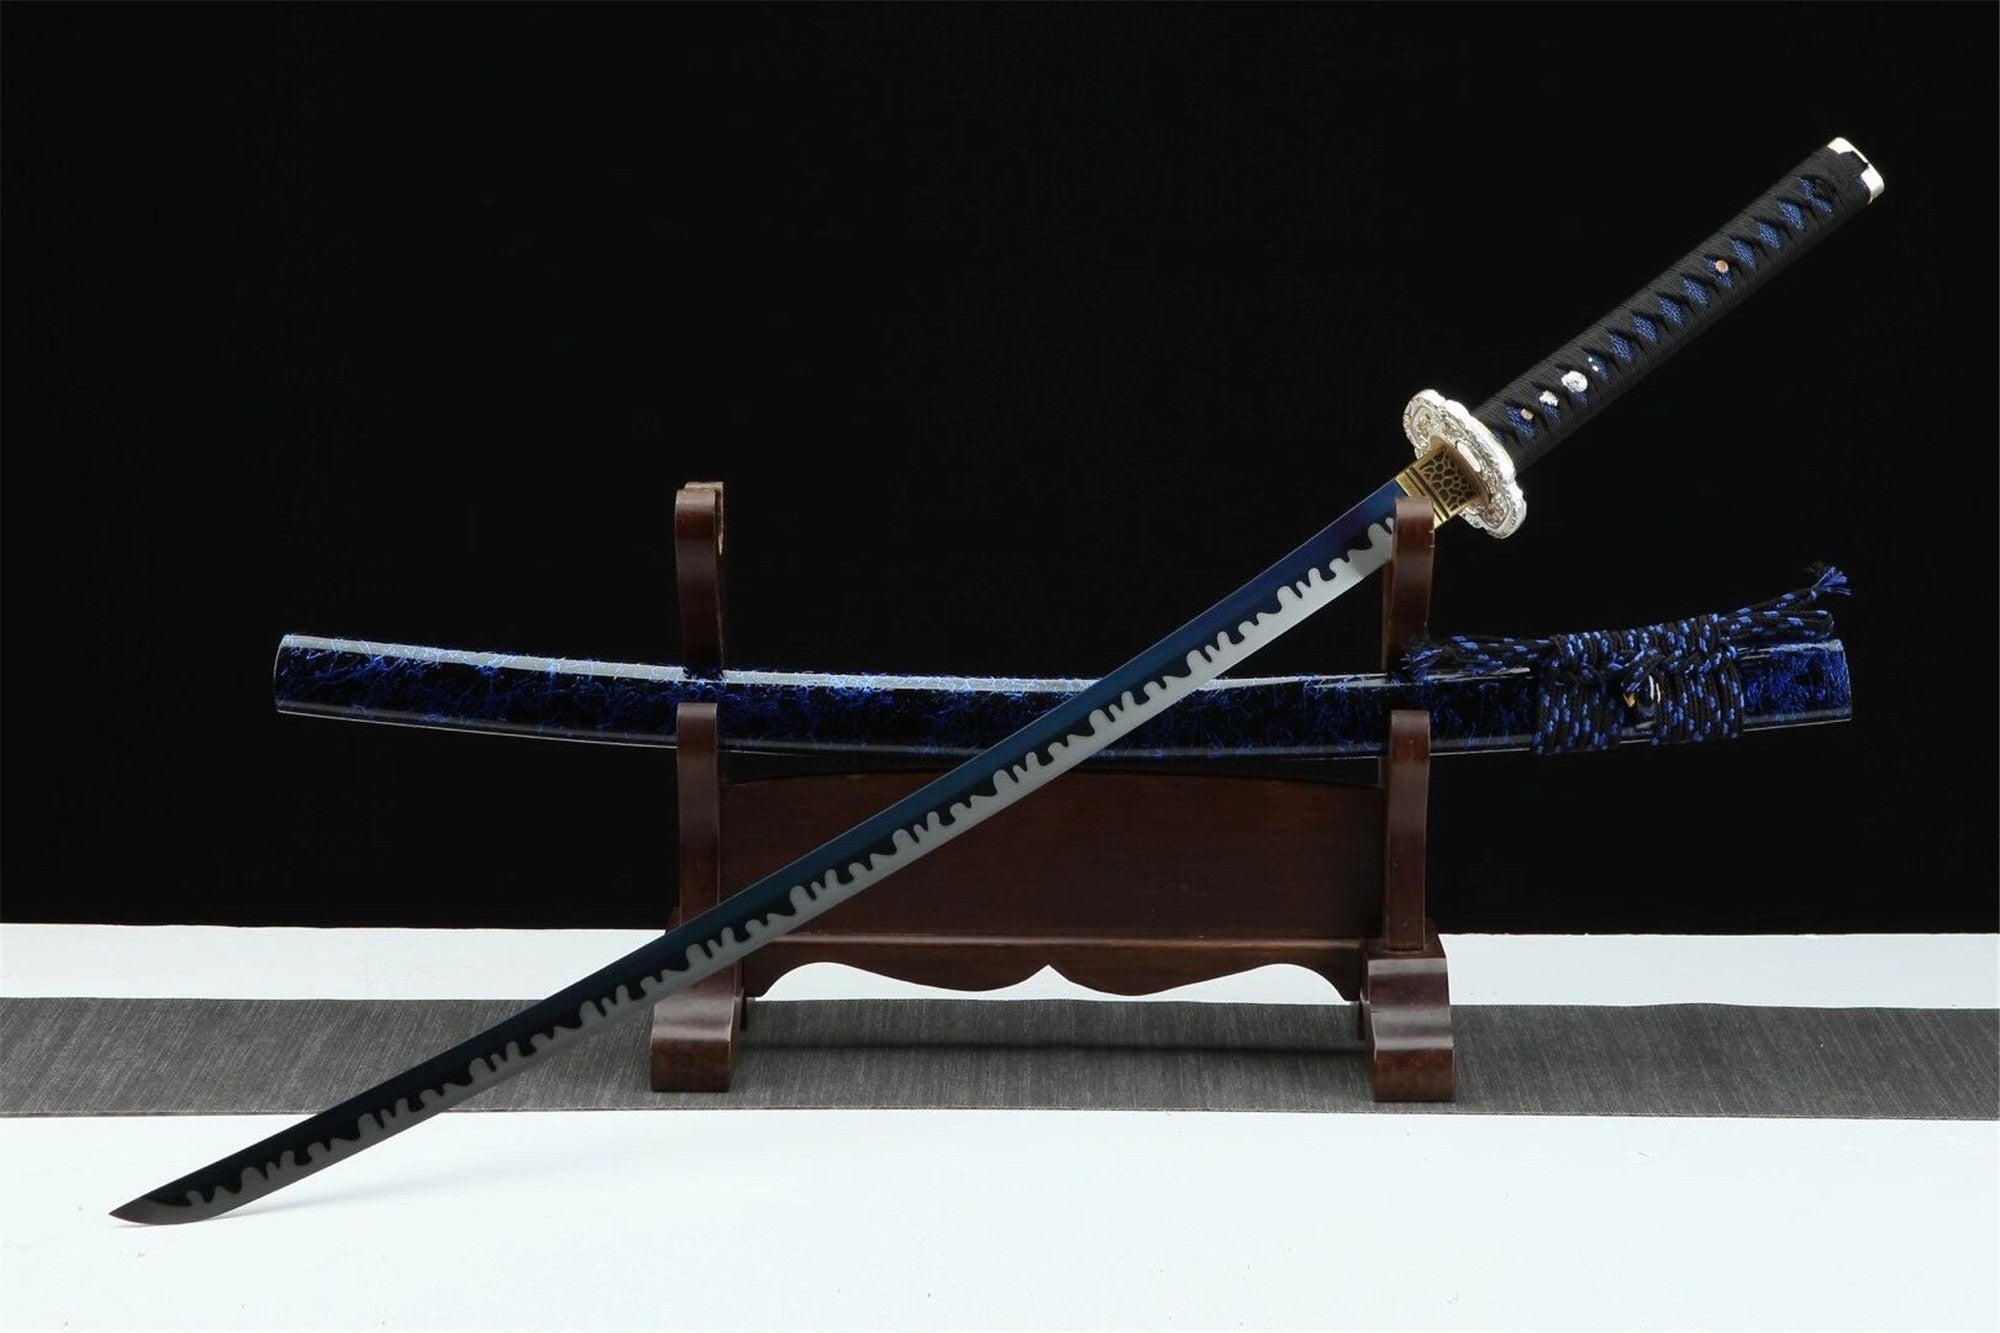 High manganese steel,Blue Blade,Japanese katana,Handmade Samurai sword,Real Katana,Full Tang